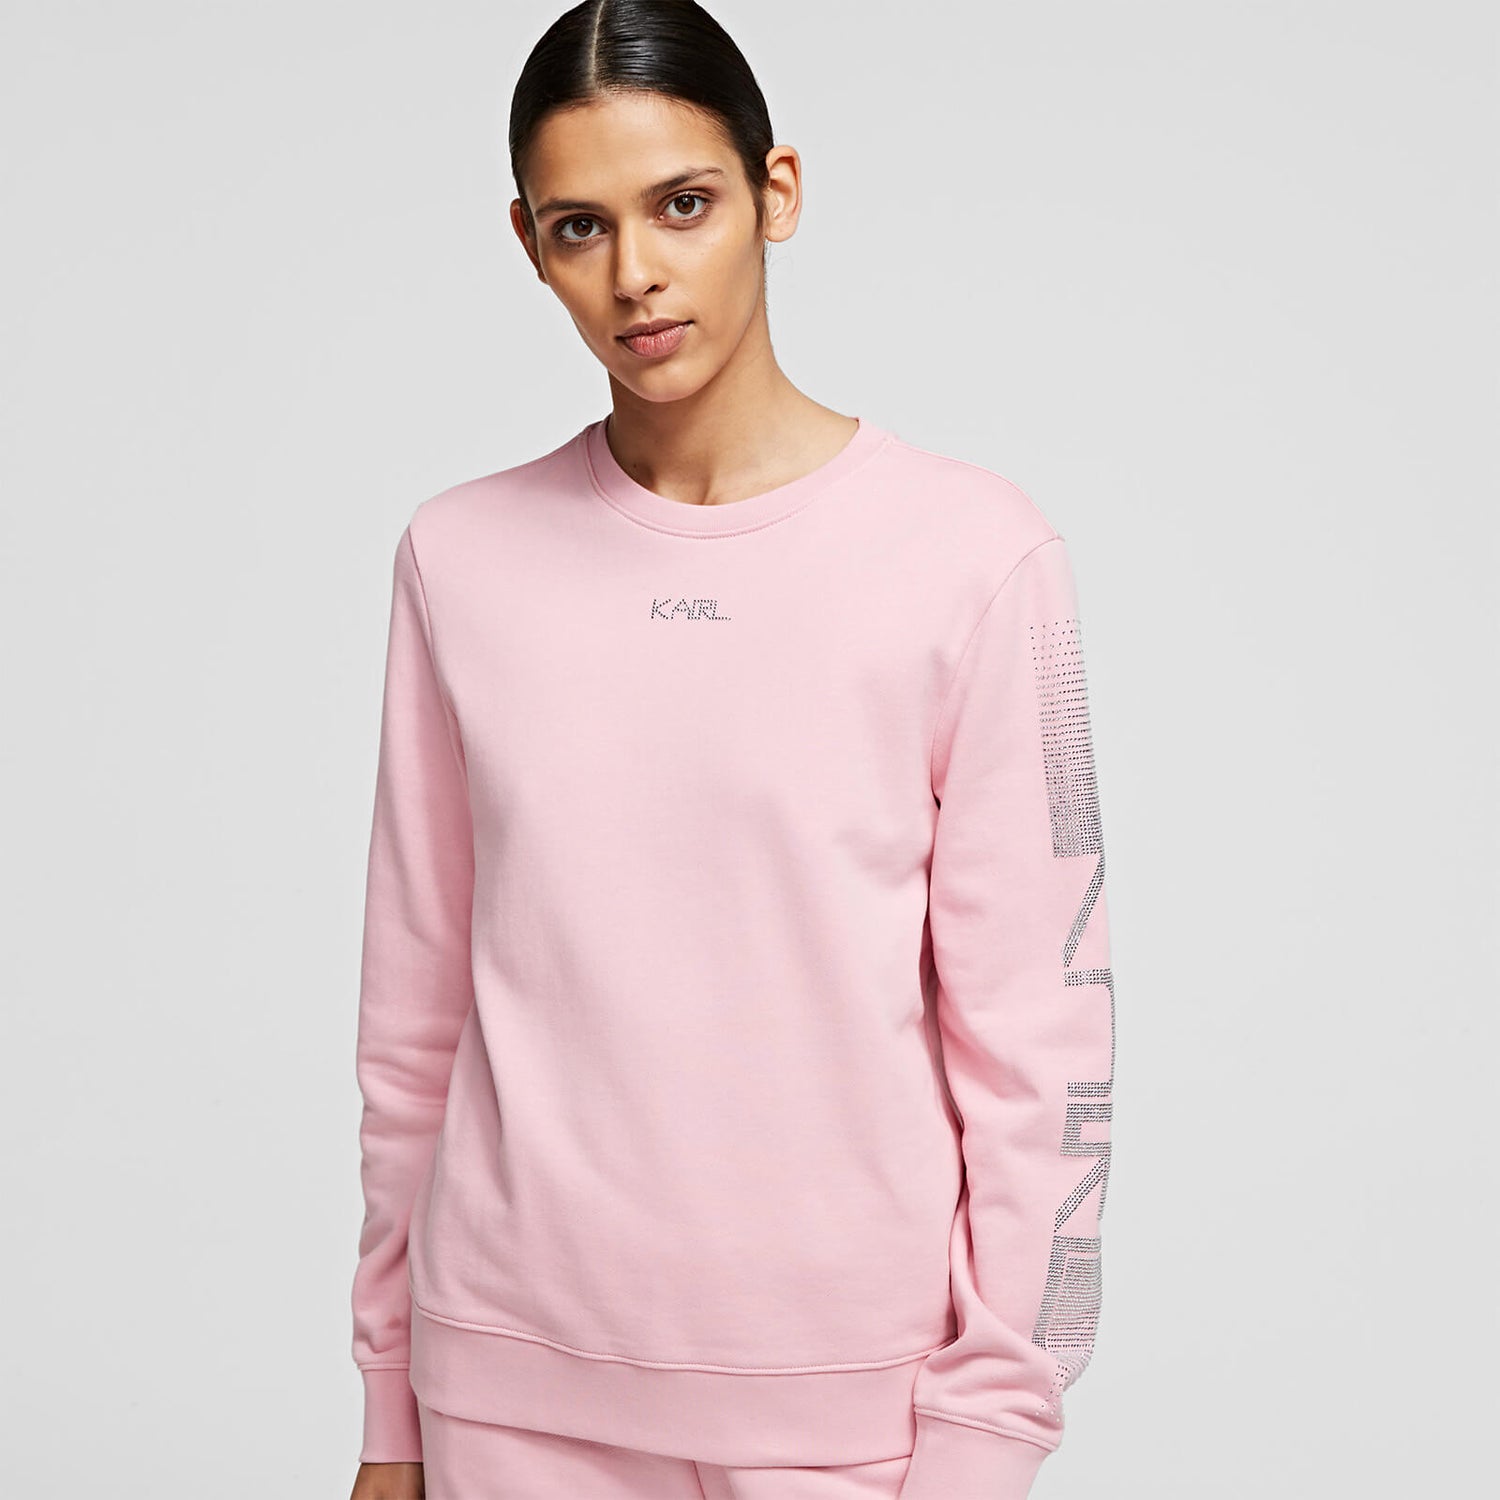 KARL LAGERFELD Women's Rhinestone Logo Sweatshirt - Pink